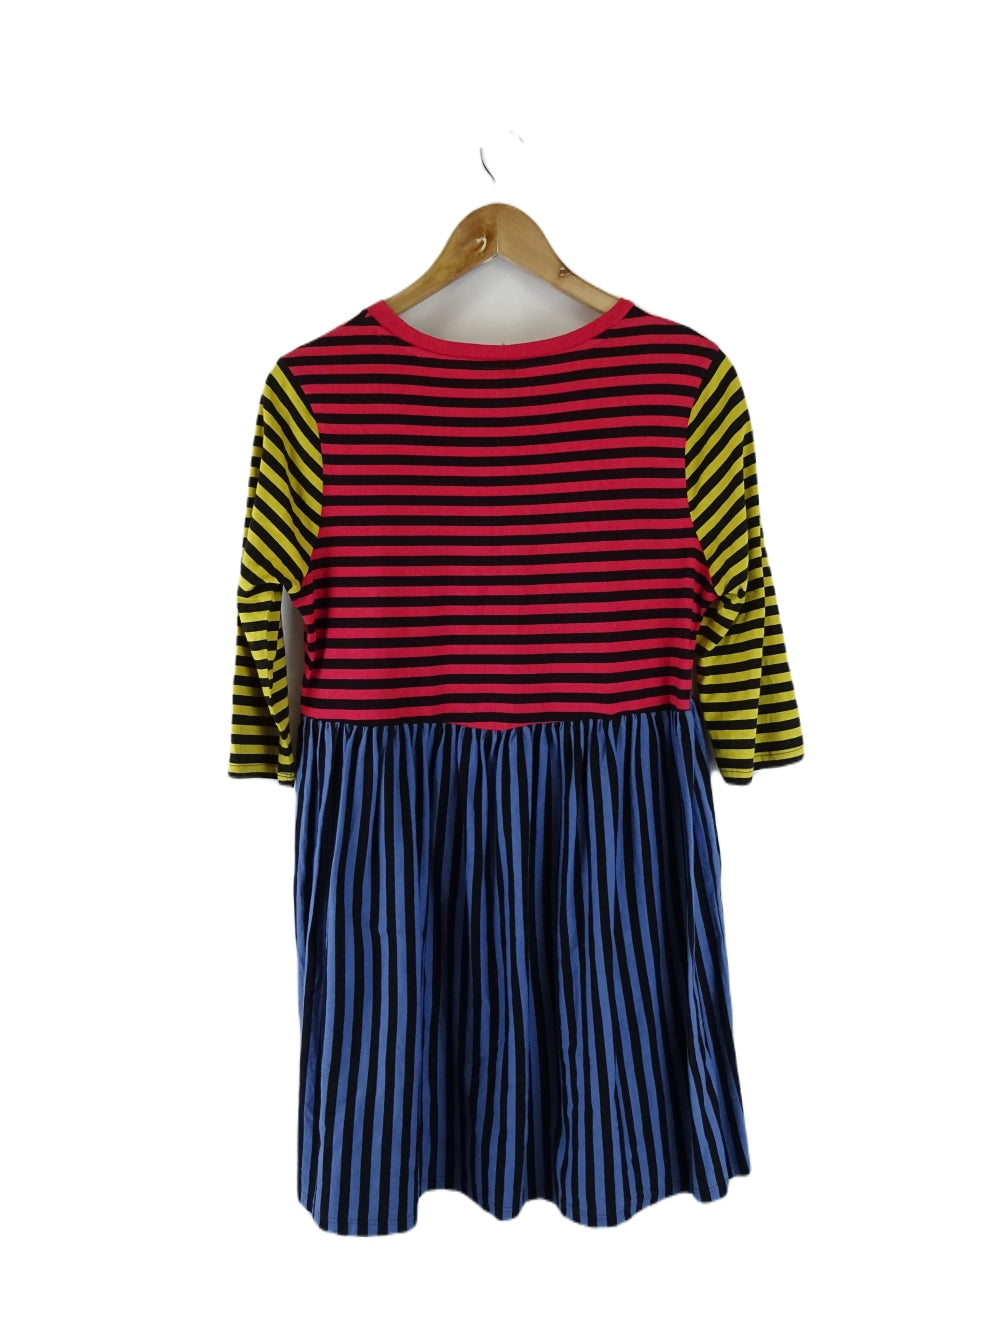 Asos Striped Dress 8